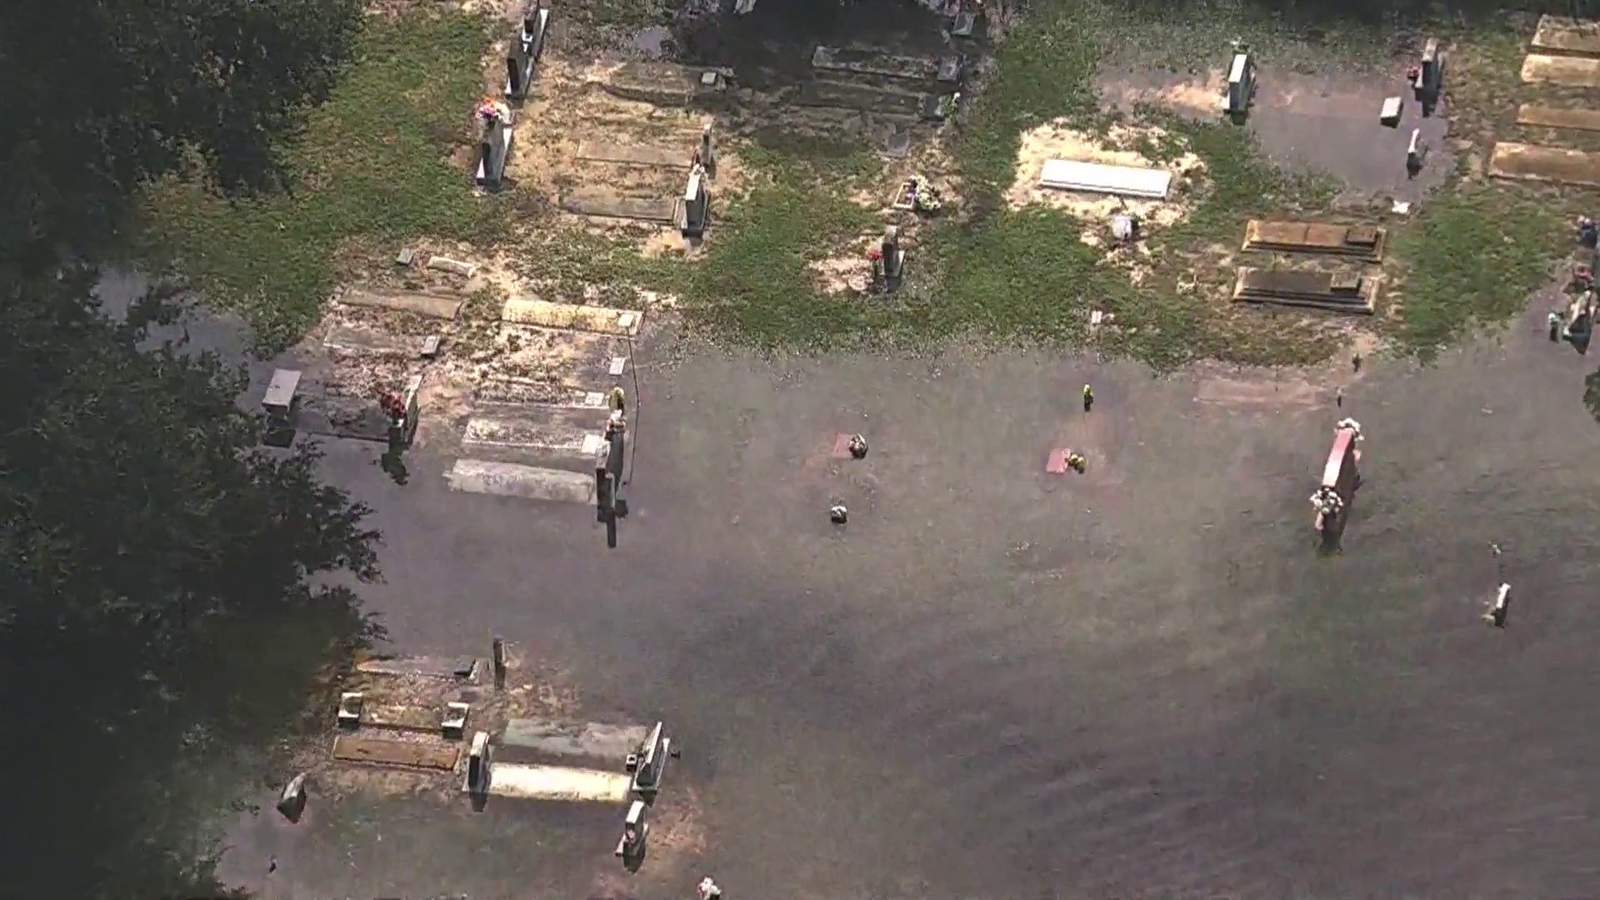 VIDEO: Graves underwater as Oakland cemetery floods